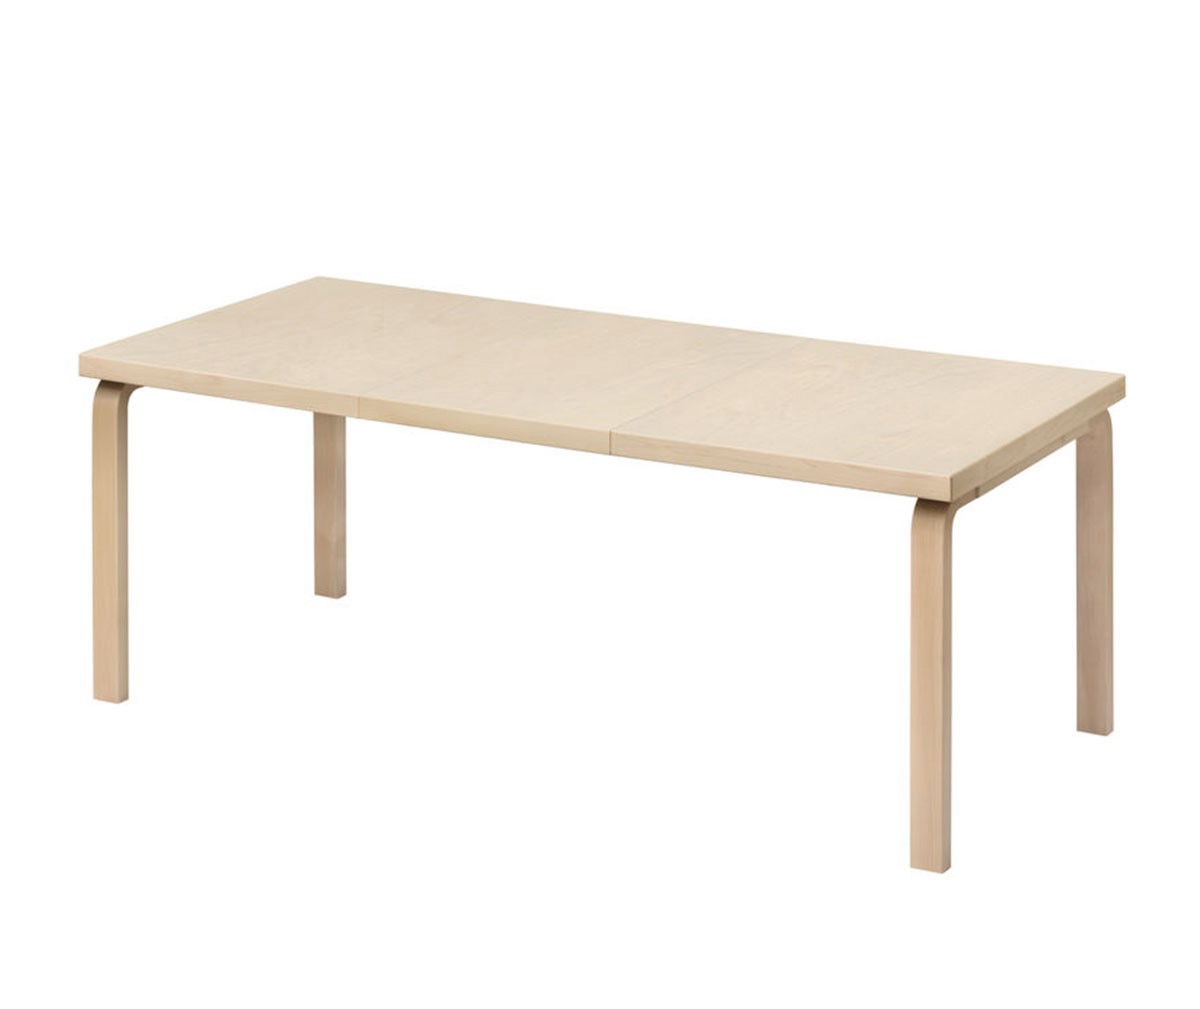 Artek Pöytä 97 koivu, 85 x 135-190 cm